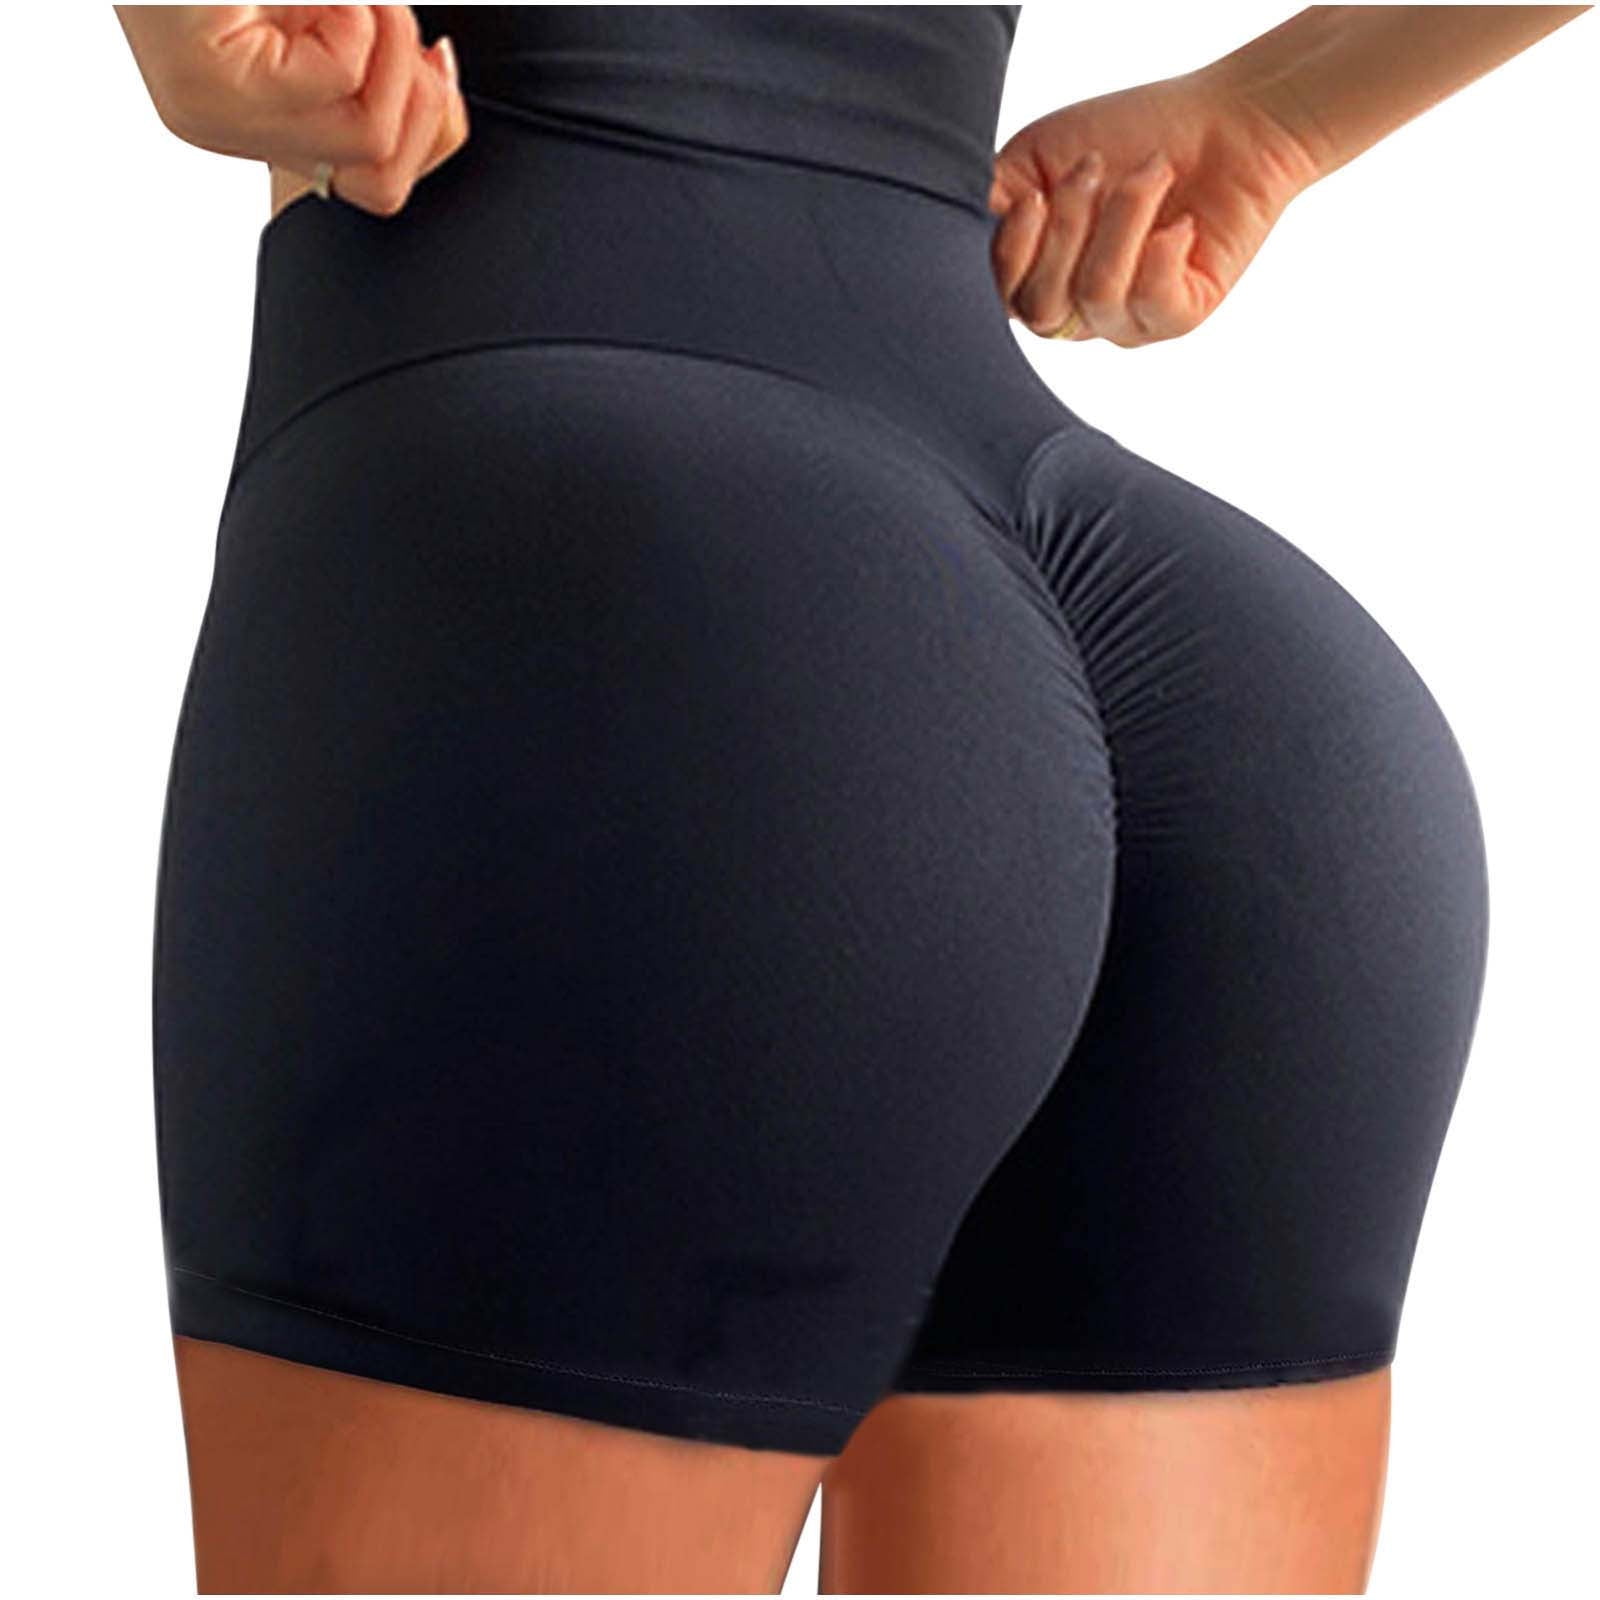 Efsteb High Waist Yoga Pants with Pockets Women Athletic Sport